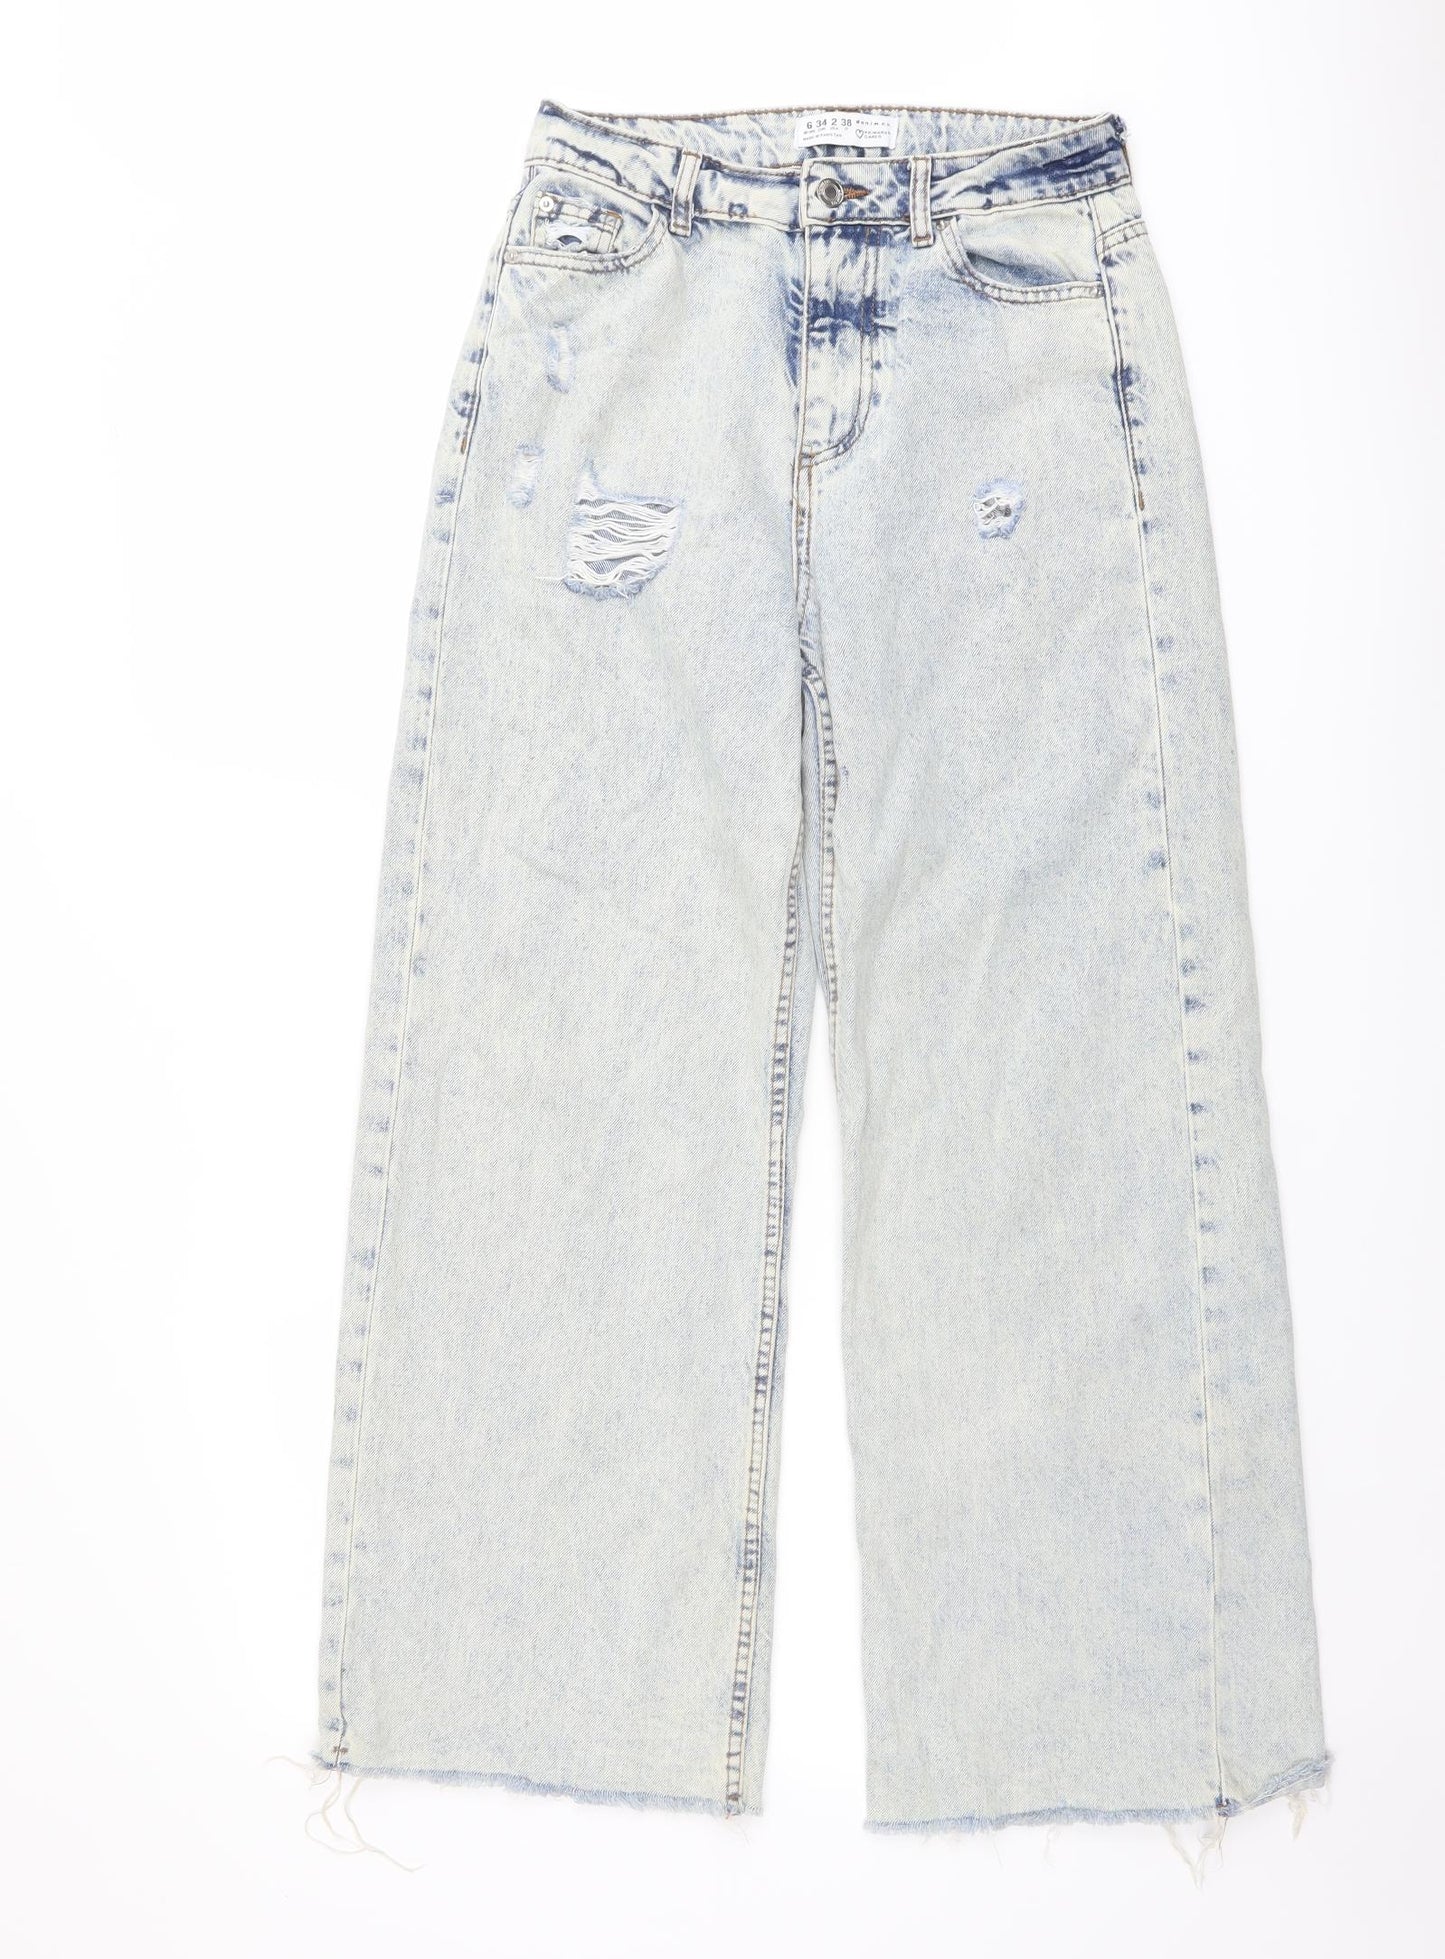 Denim & Co. Womens Blue Cotton Wide-Leg Jeans Size 6 L27 in Regular Button - Frayed Hem